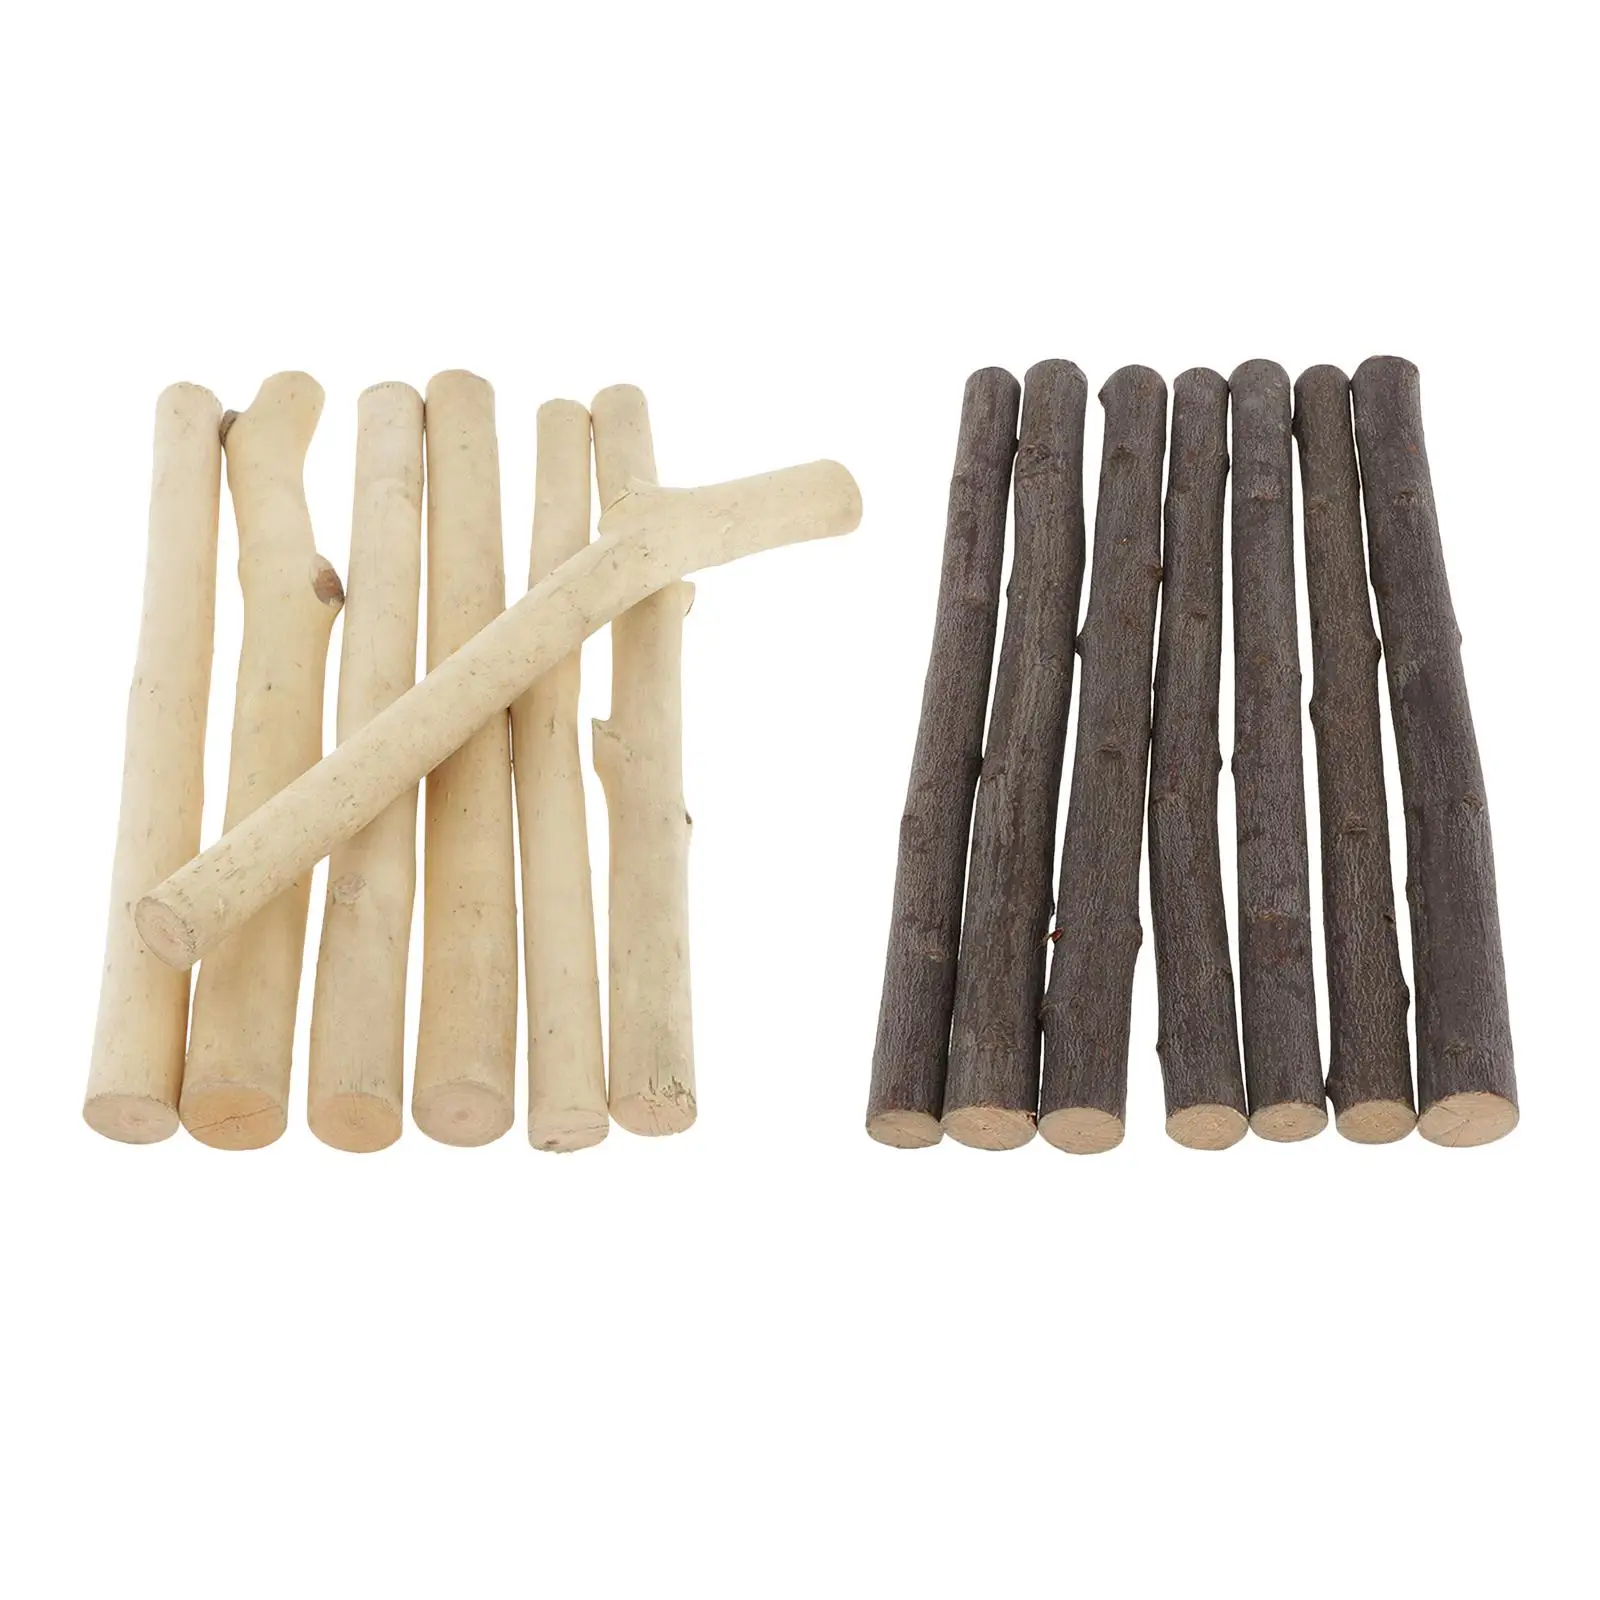 7 pieces unfinished wooden chopsticks dowel rods for diy crafts, natural